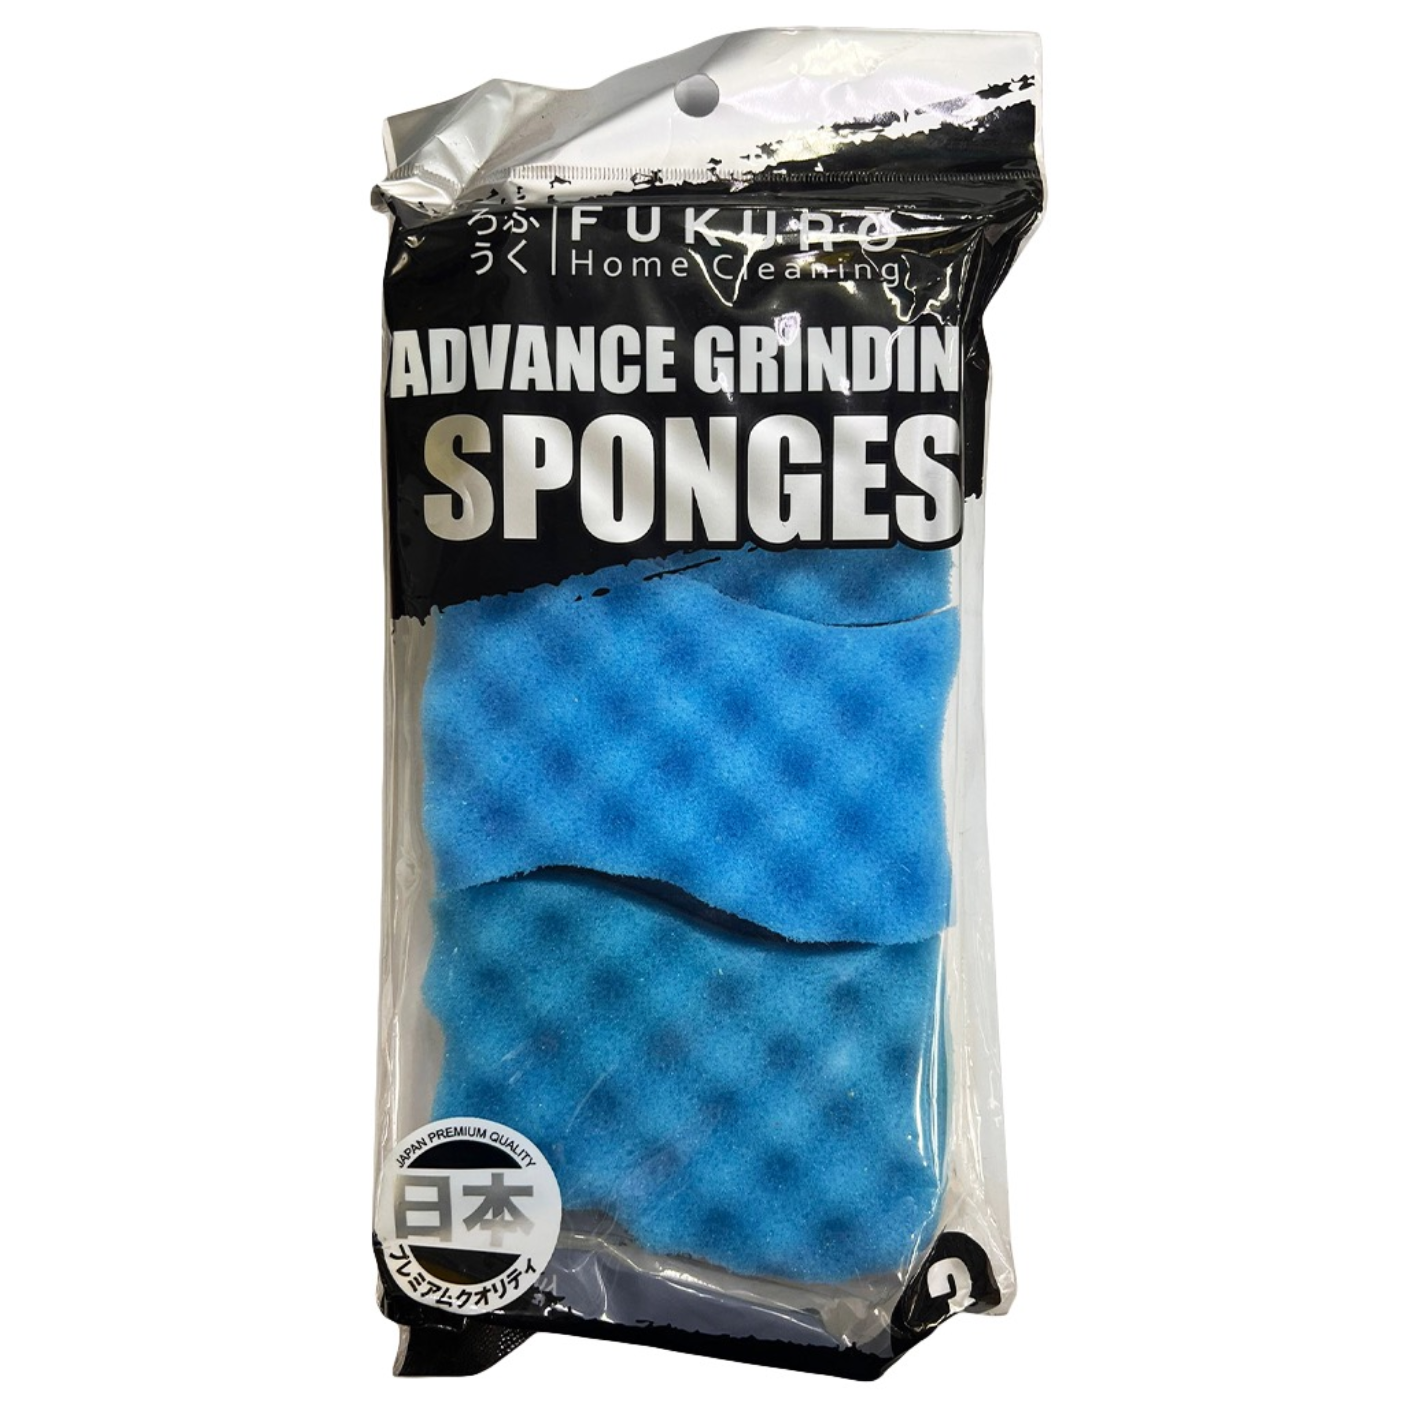 FUKURO STAIN REMOVING Advance Grinding Sponge 3PC/PACK